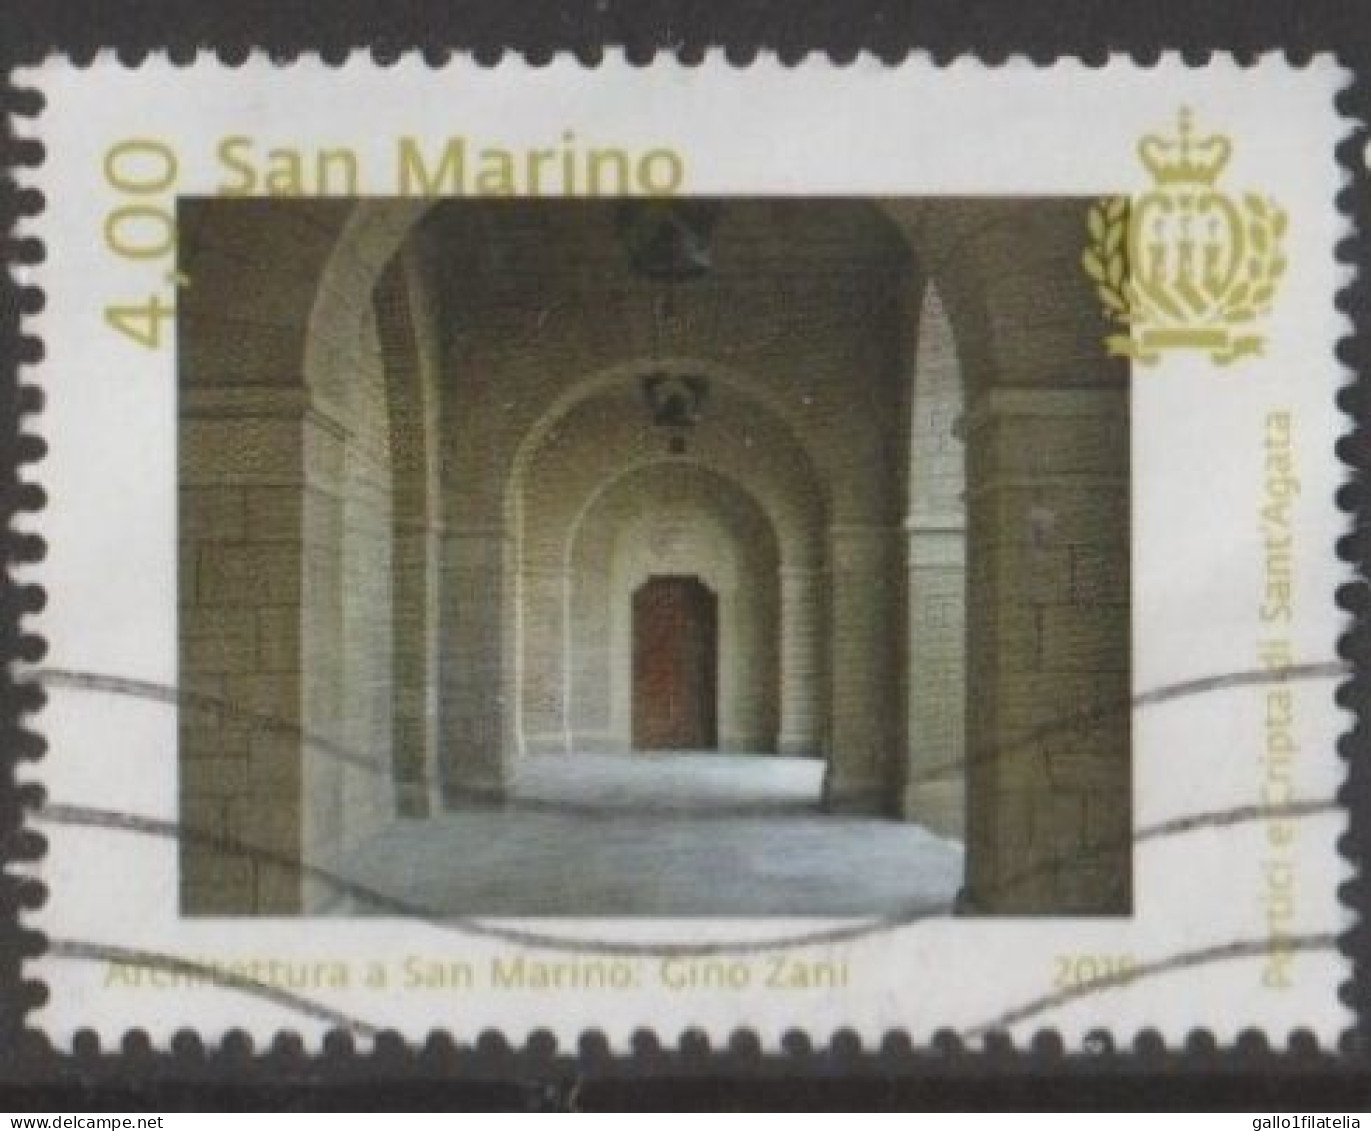 2015 - SAN MARINO - ARCHITETTURA A SAN MARINO / ARCHITECTURE IN SAN MARINO - USATO. - Gebraucht